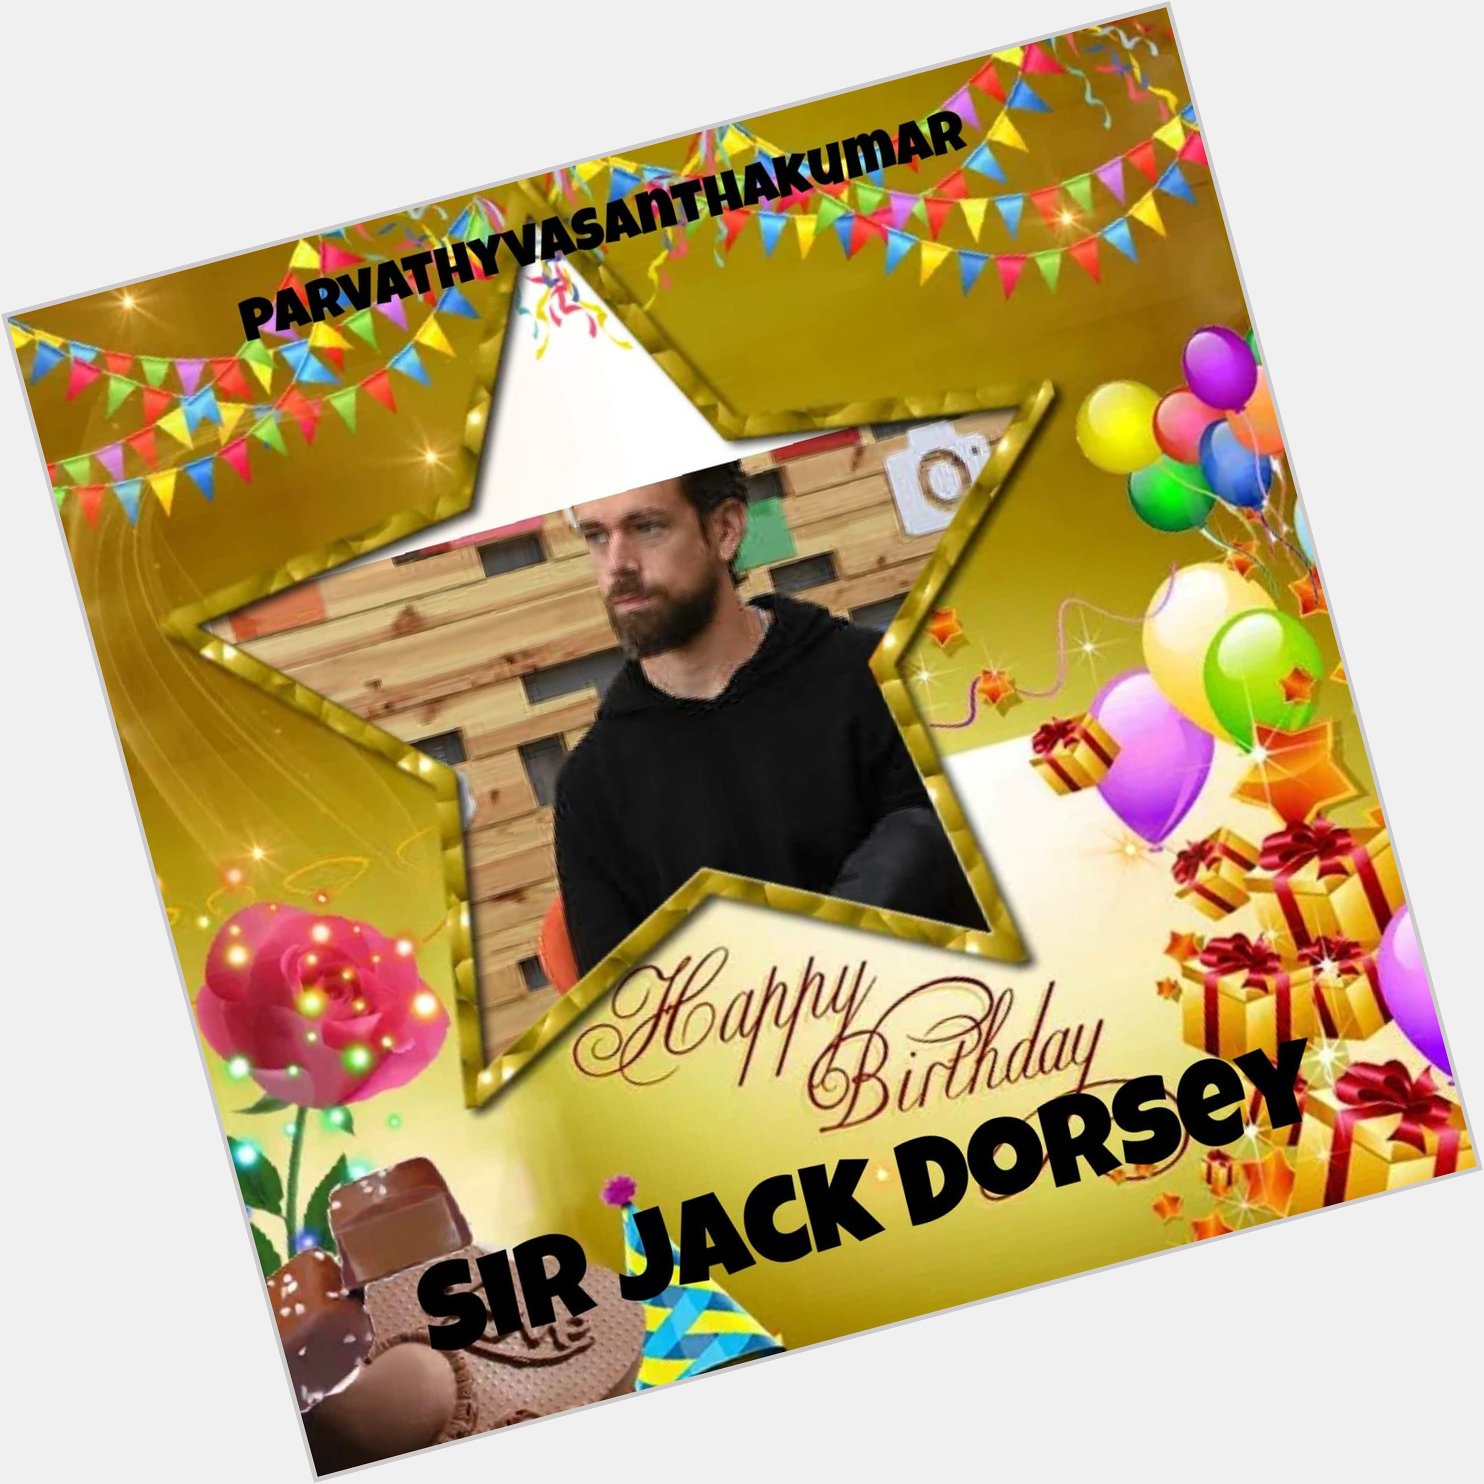 Happy birthday
Sir Jack Dorsey   